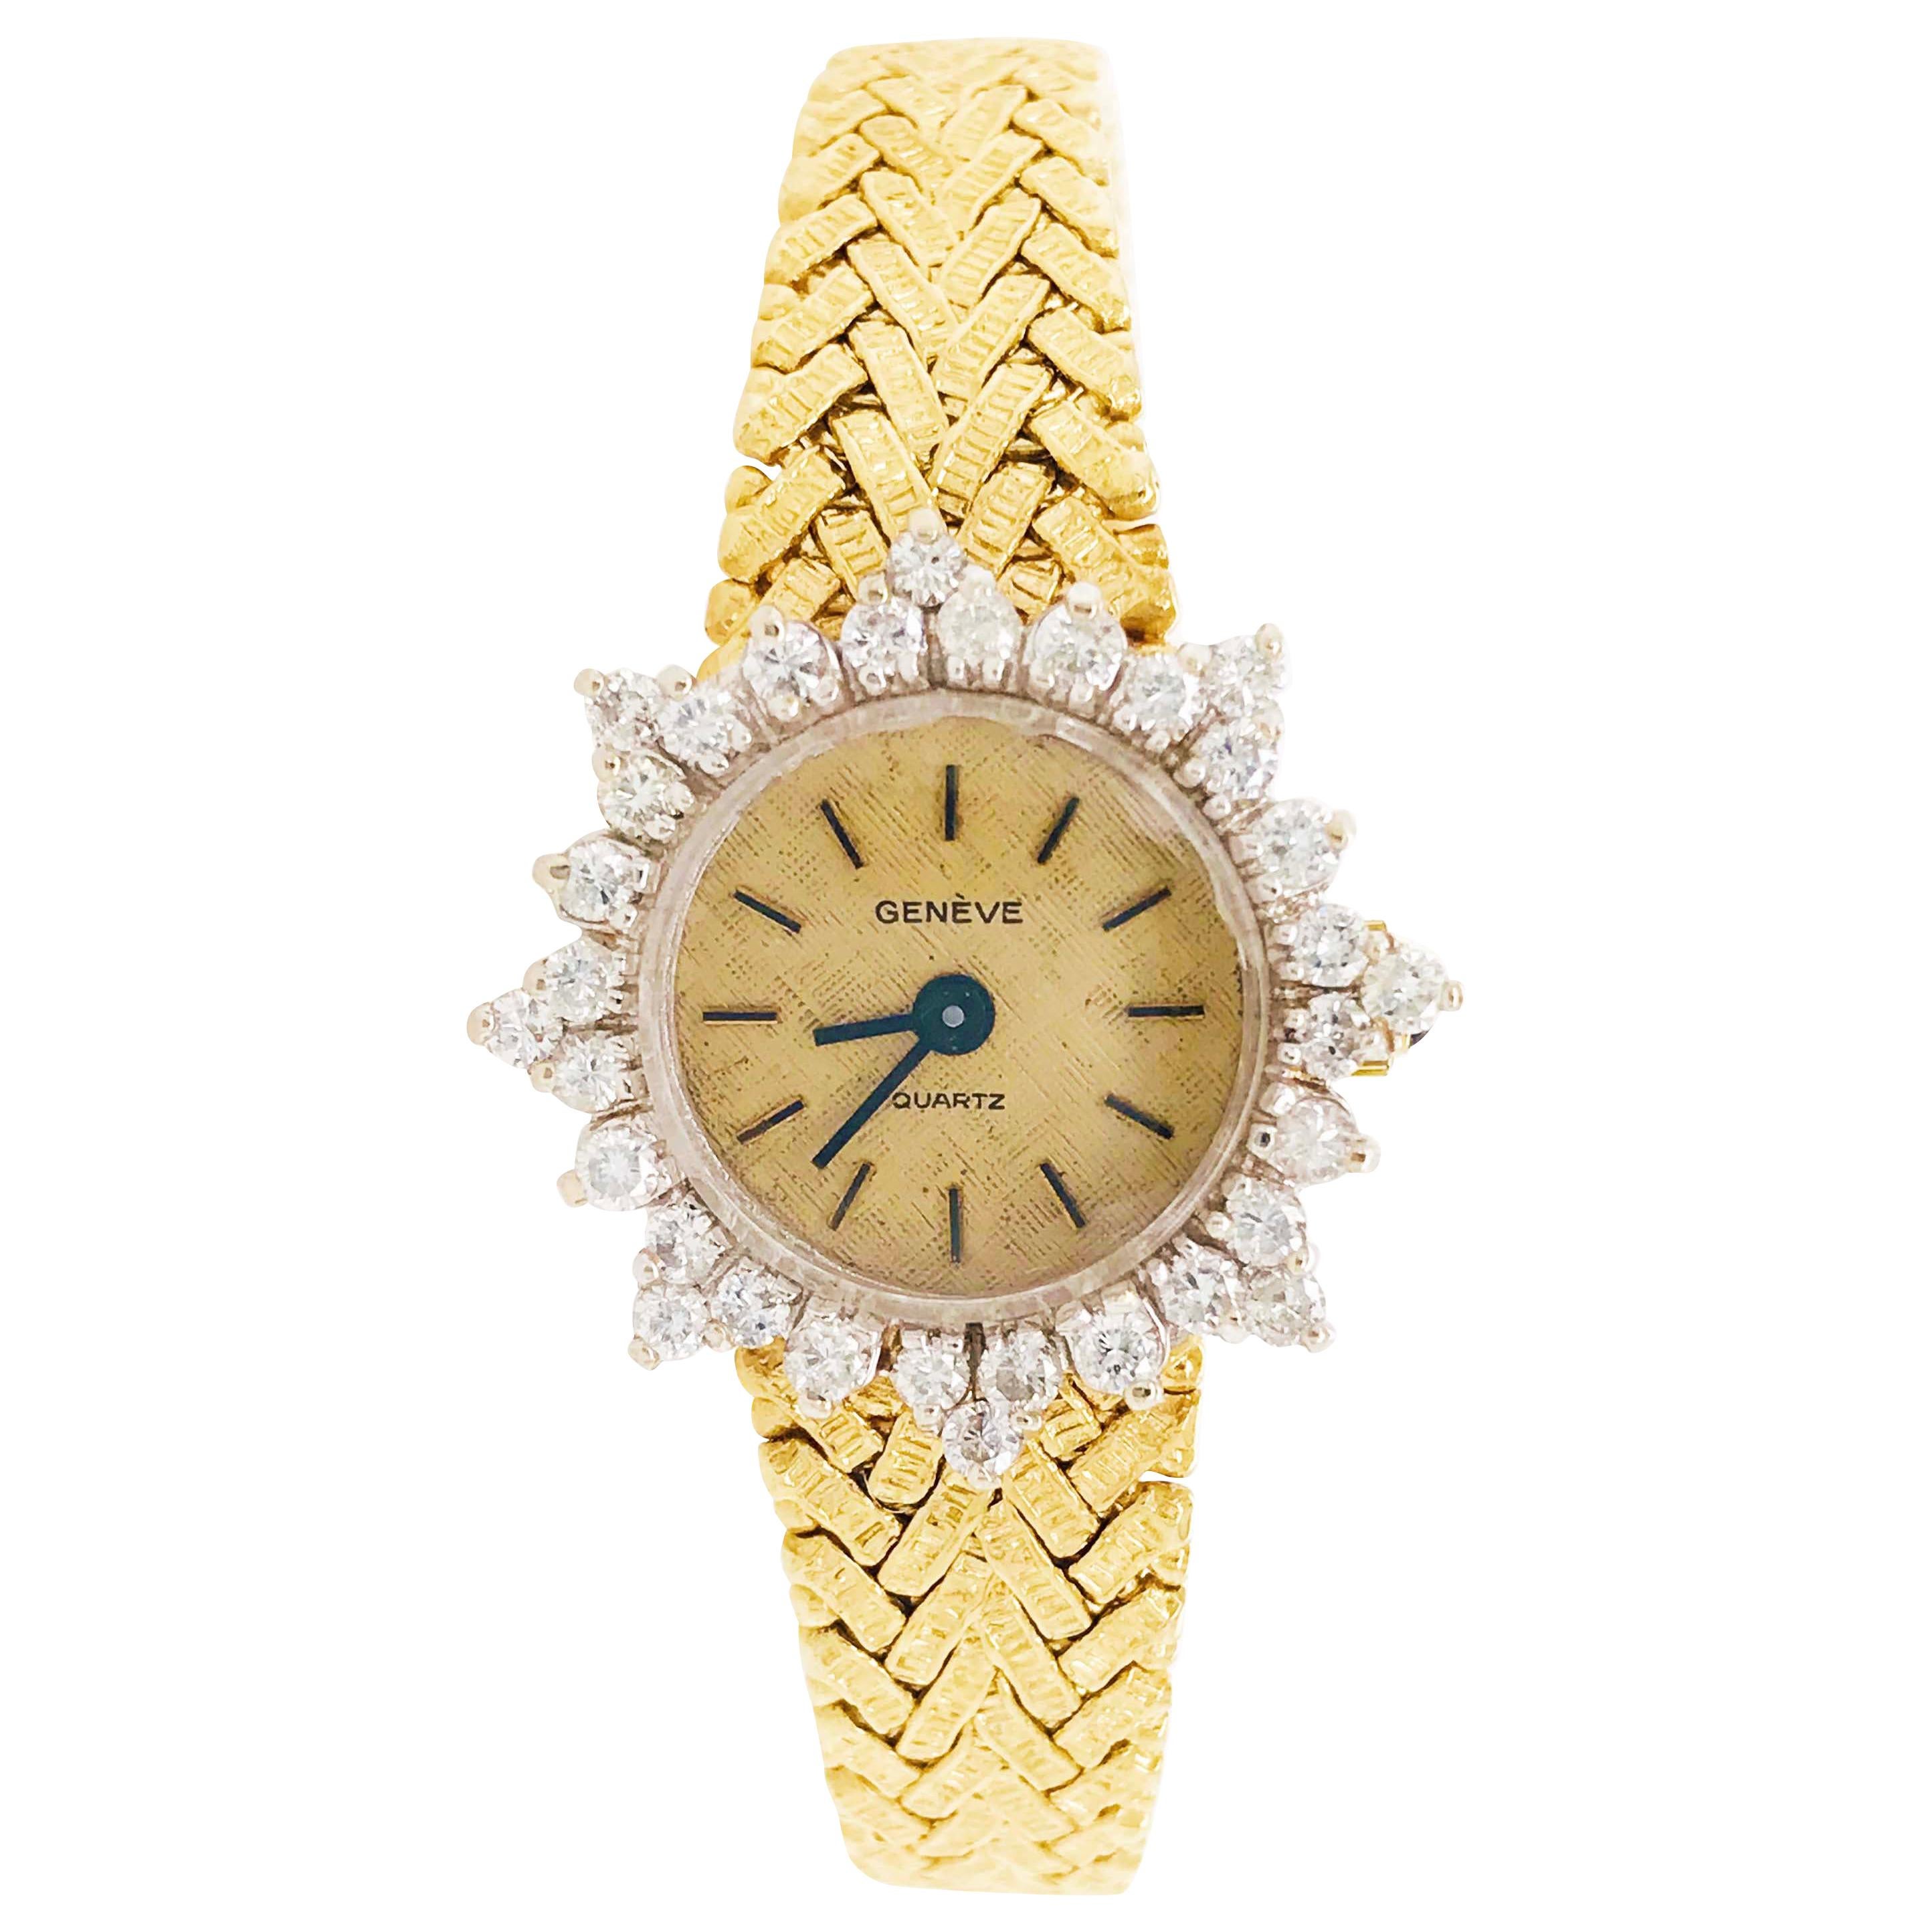 Ladies Dress Watch, Geneve Quartz 1.50 Carat Diamond Dial and Gold Textured Band